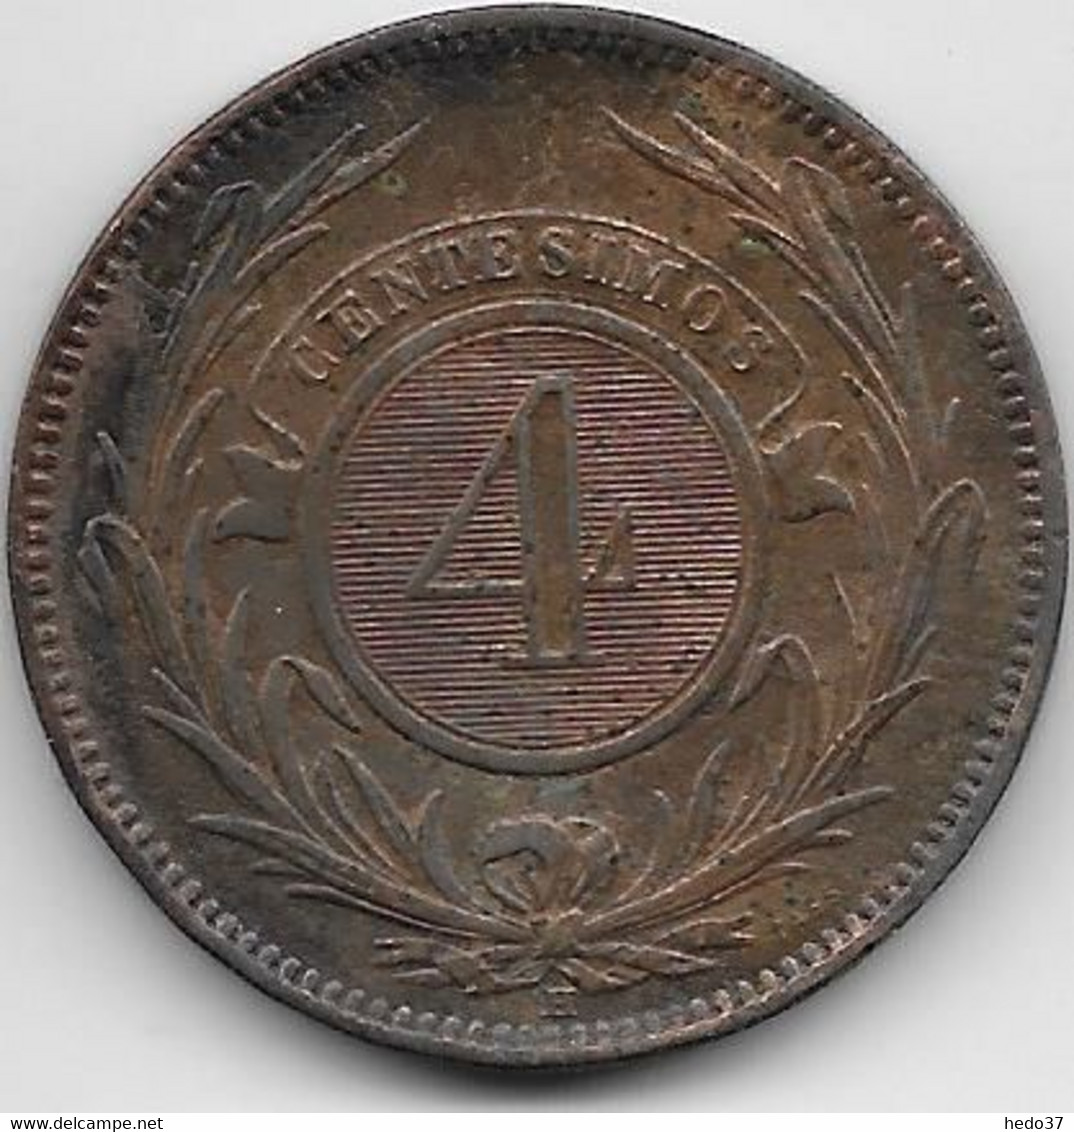 Uruguay - 4 Centesimos 1869 - TTB - Uruguay